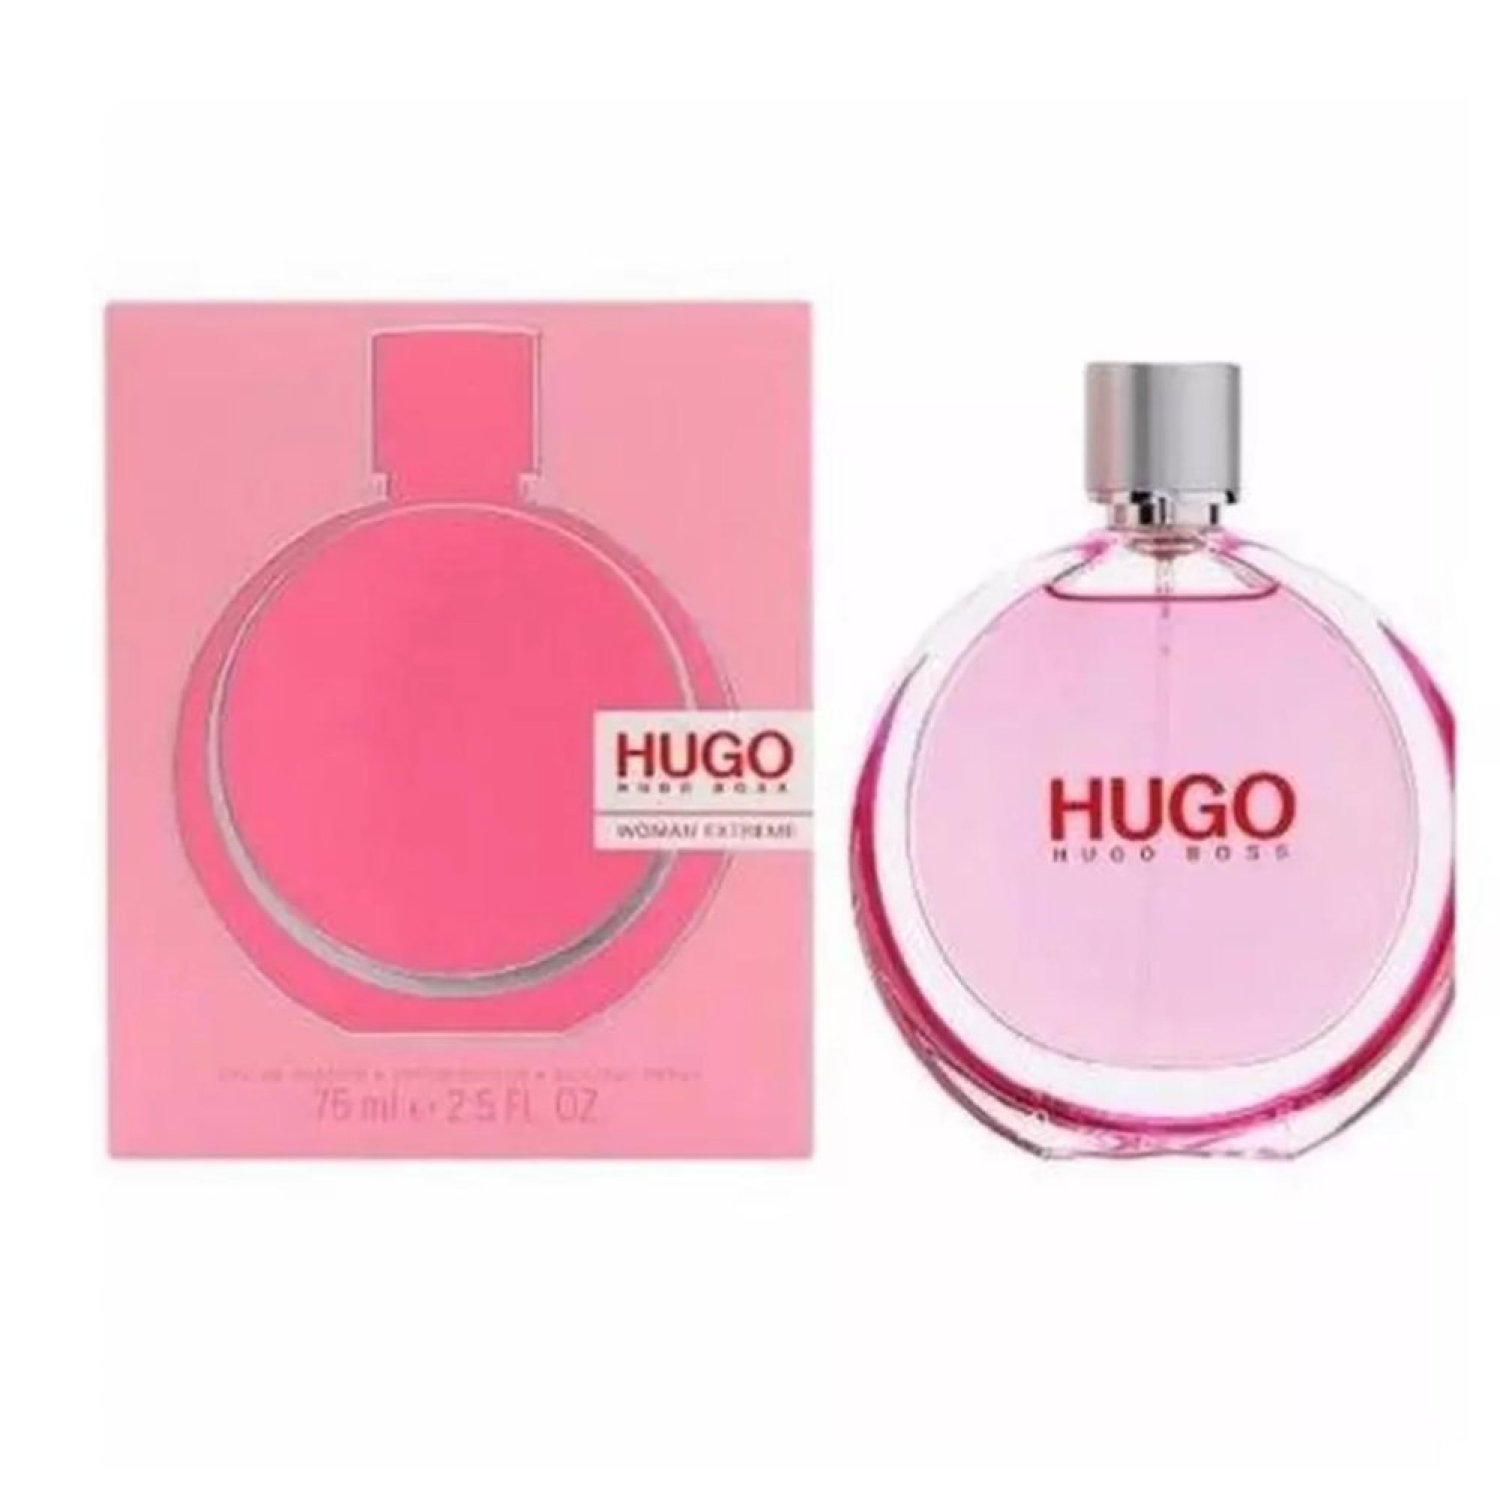 hugo boss perfume woman extreme